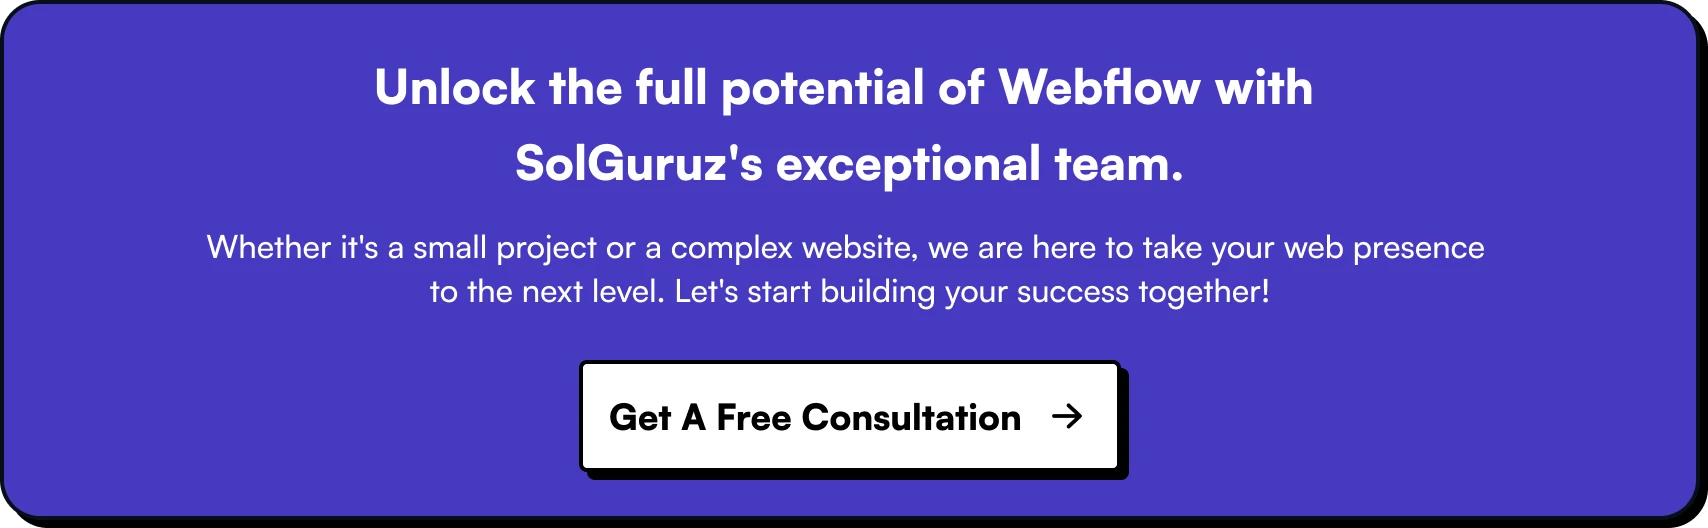 SolGuruz - A leading Webflow development company